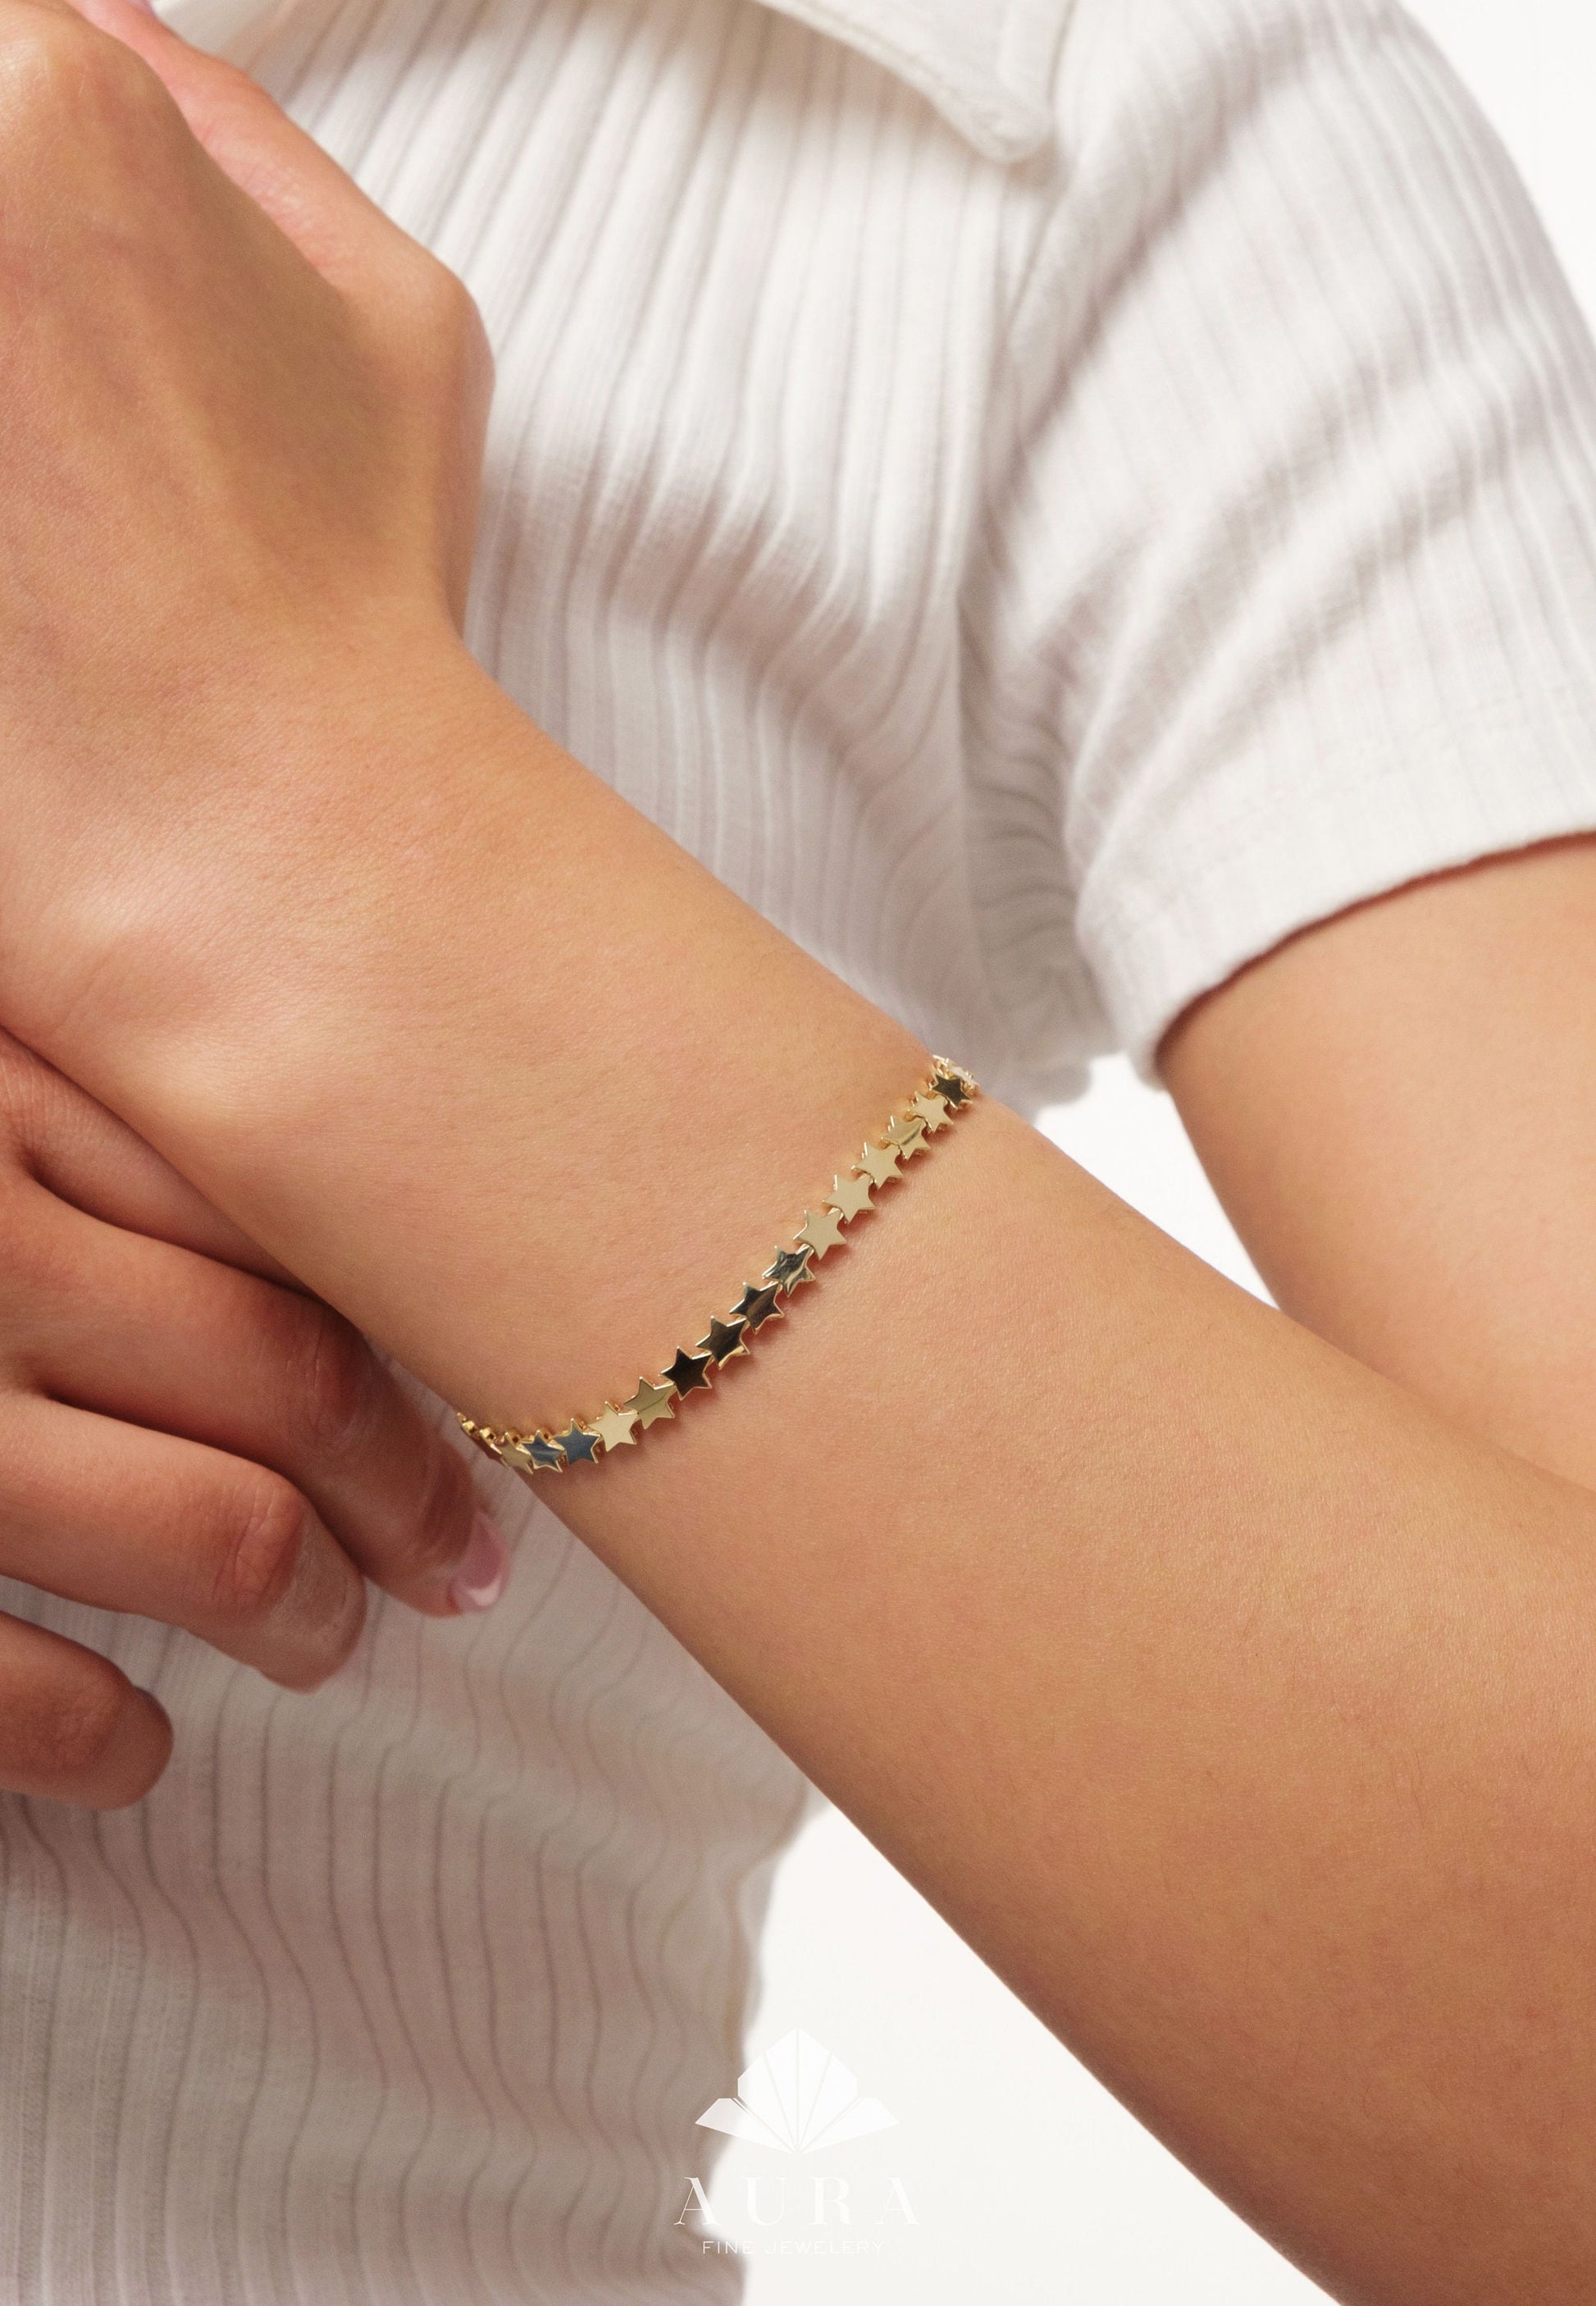 14K Gold Multi Star Bracelet, Star Charm Bracelet, Dainty Star Jewelry, Minimalist Celestial Bracelet, Gold Chain Bracelet, Bridal Gift